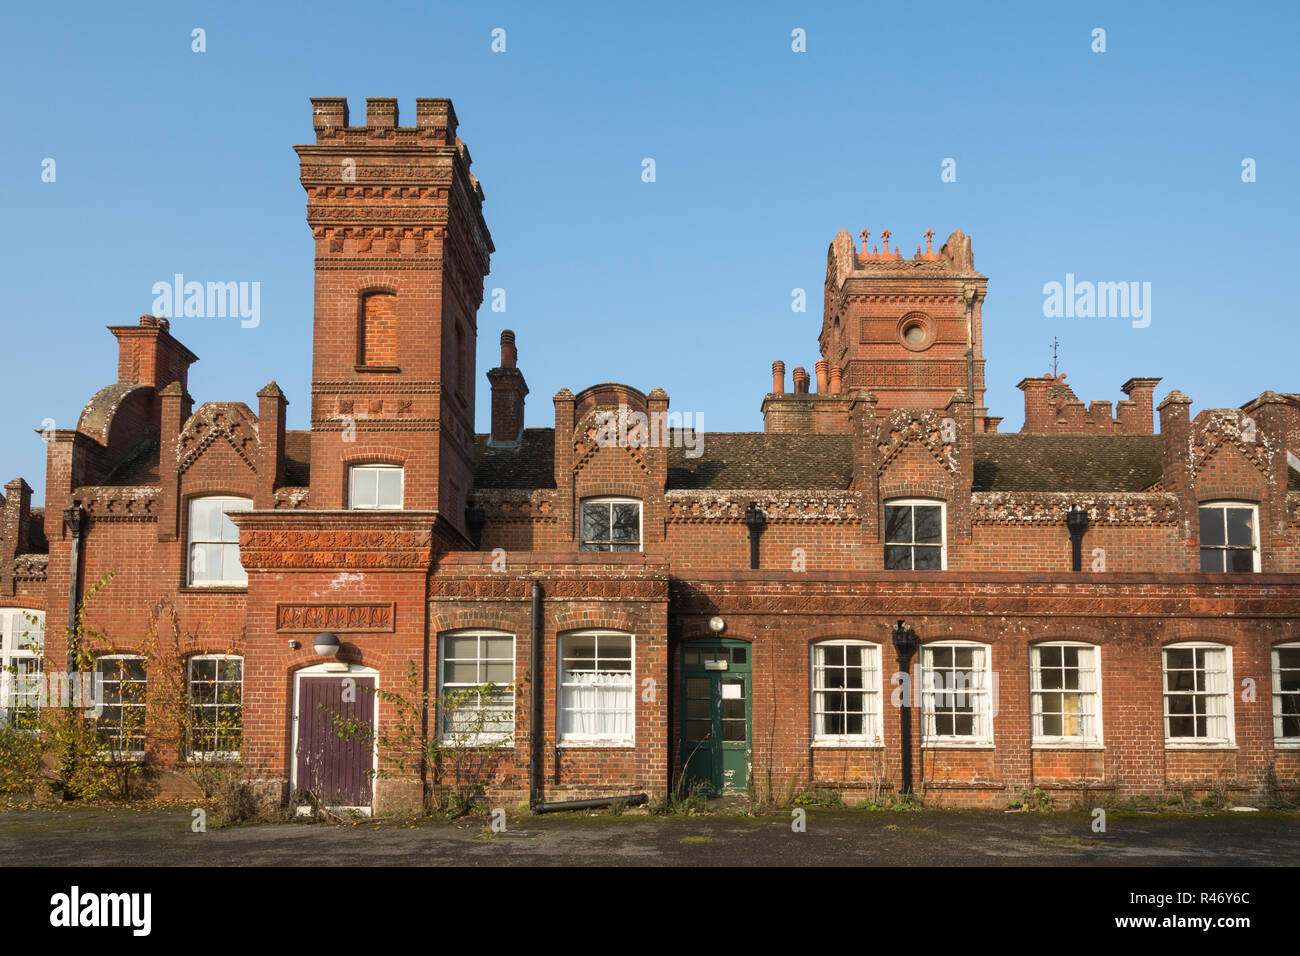 Masseys Folly, an ornate Victorian brick building built by Thomas Hackett Massey, in the village of Upper Farringdon, Hampshire, UK Stock Photo